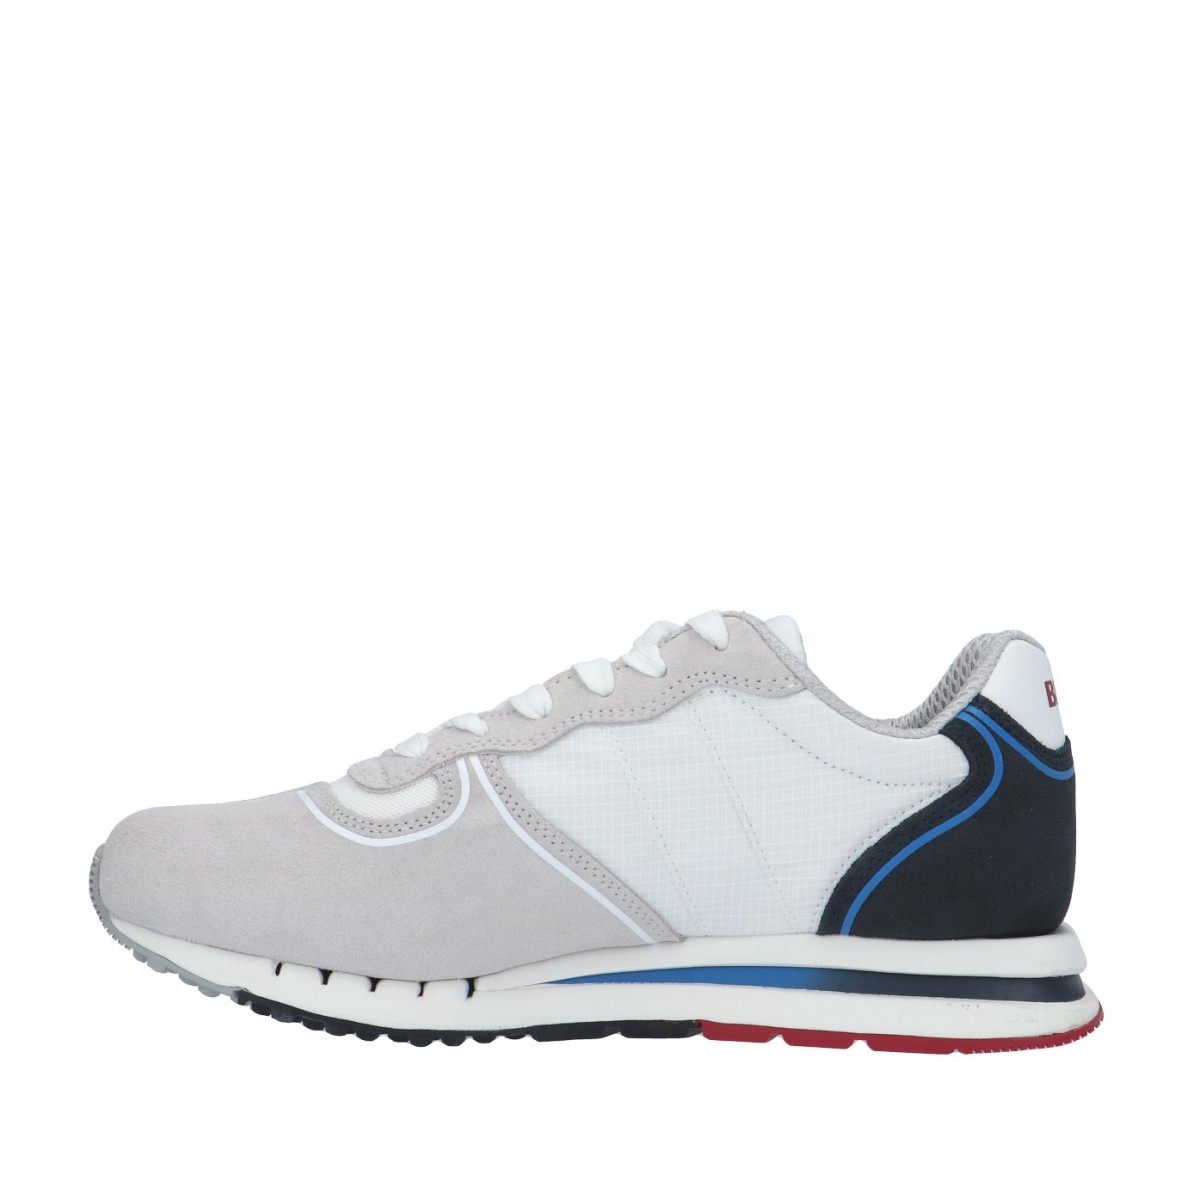 Blauer Sneaker Bianco/rosso/blu Gomma S3QUARTZ04/RIT